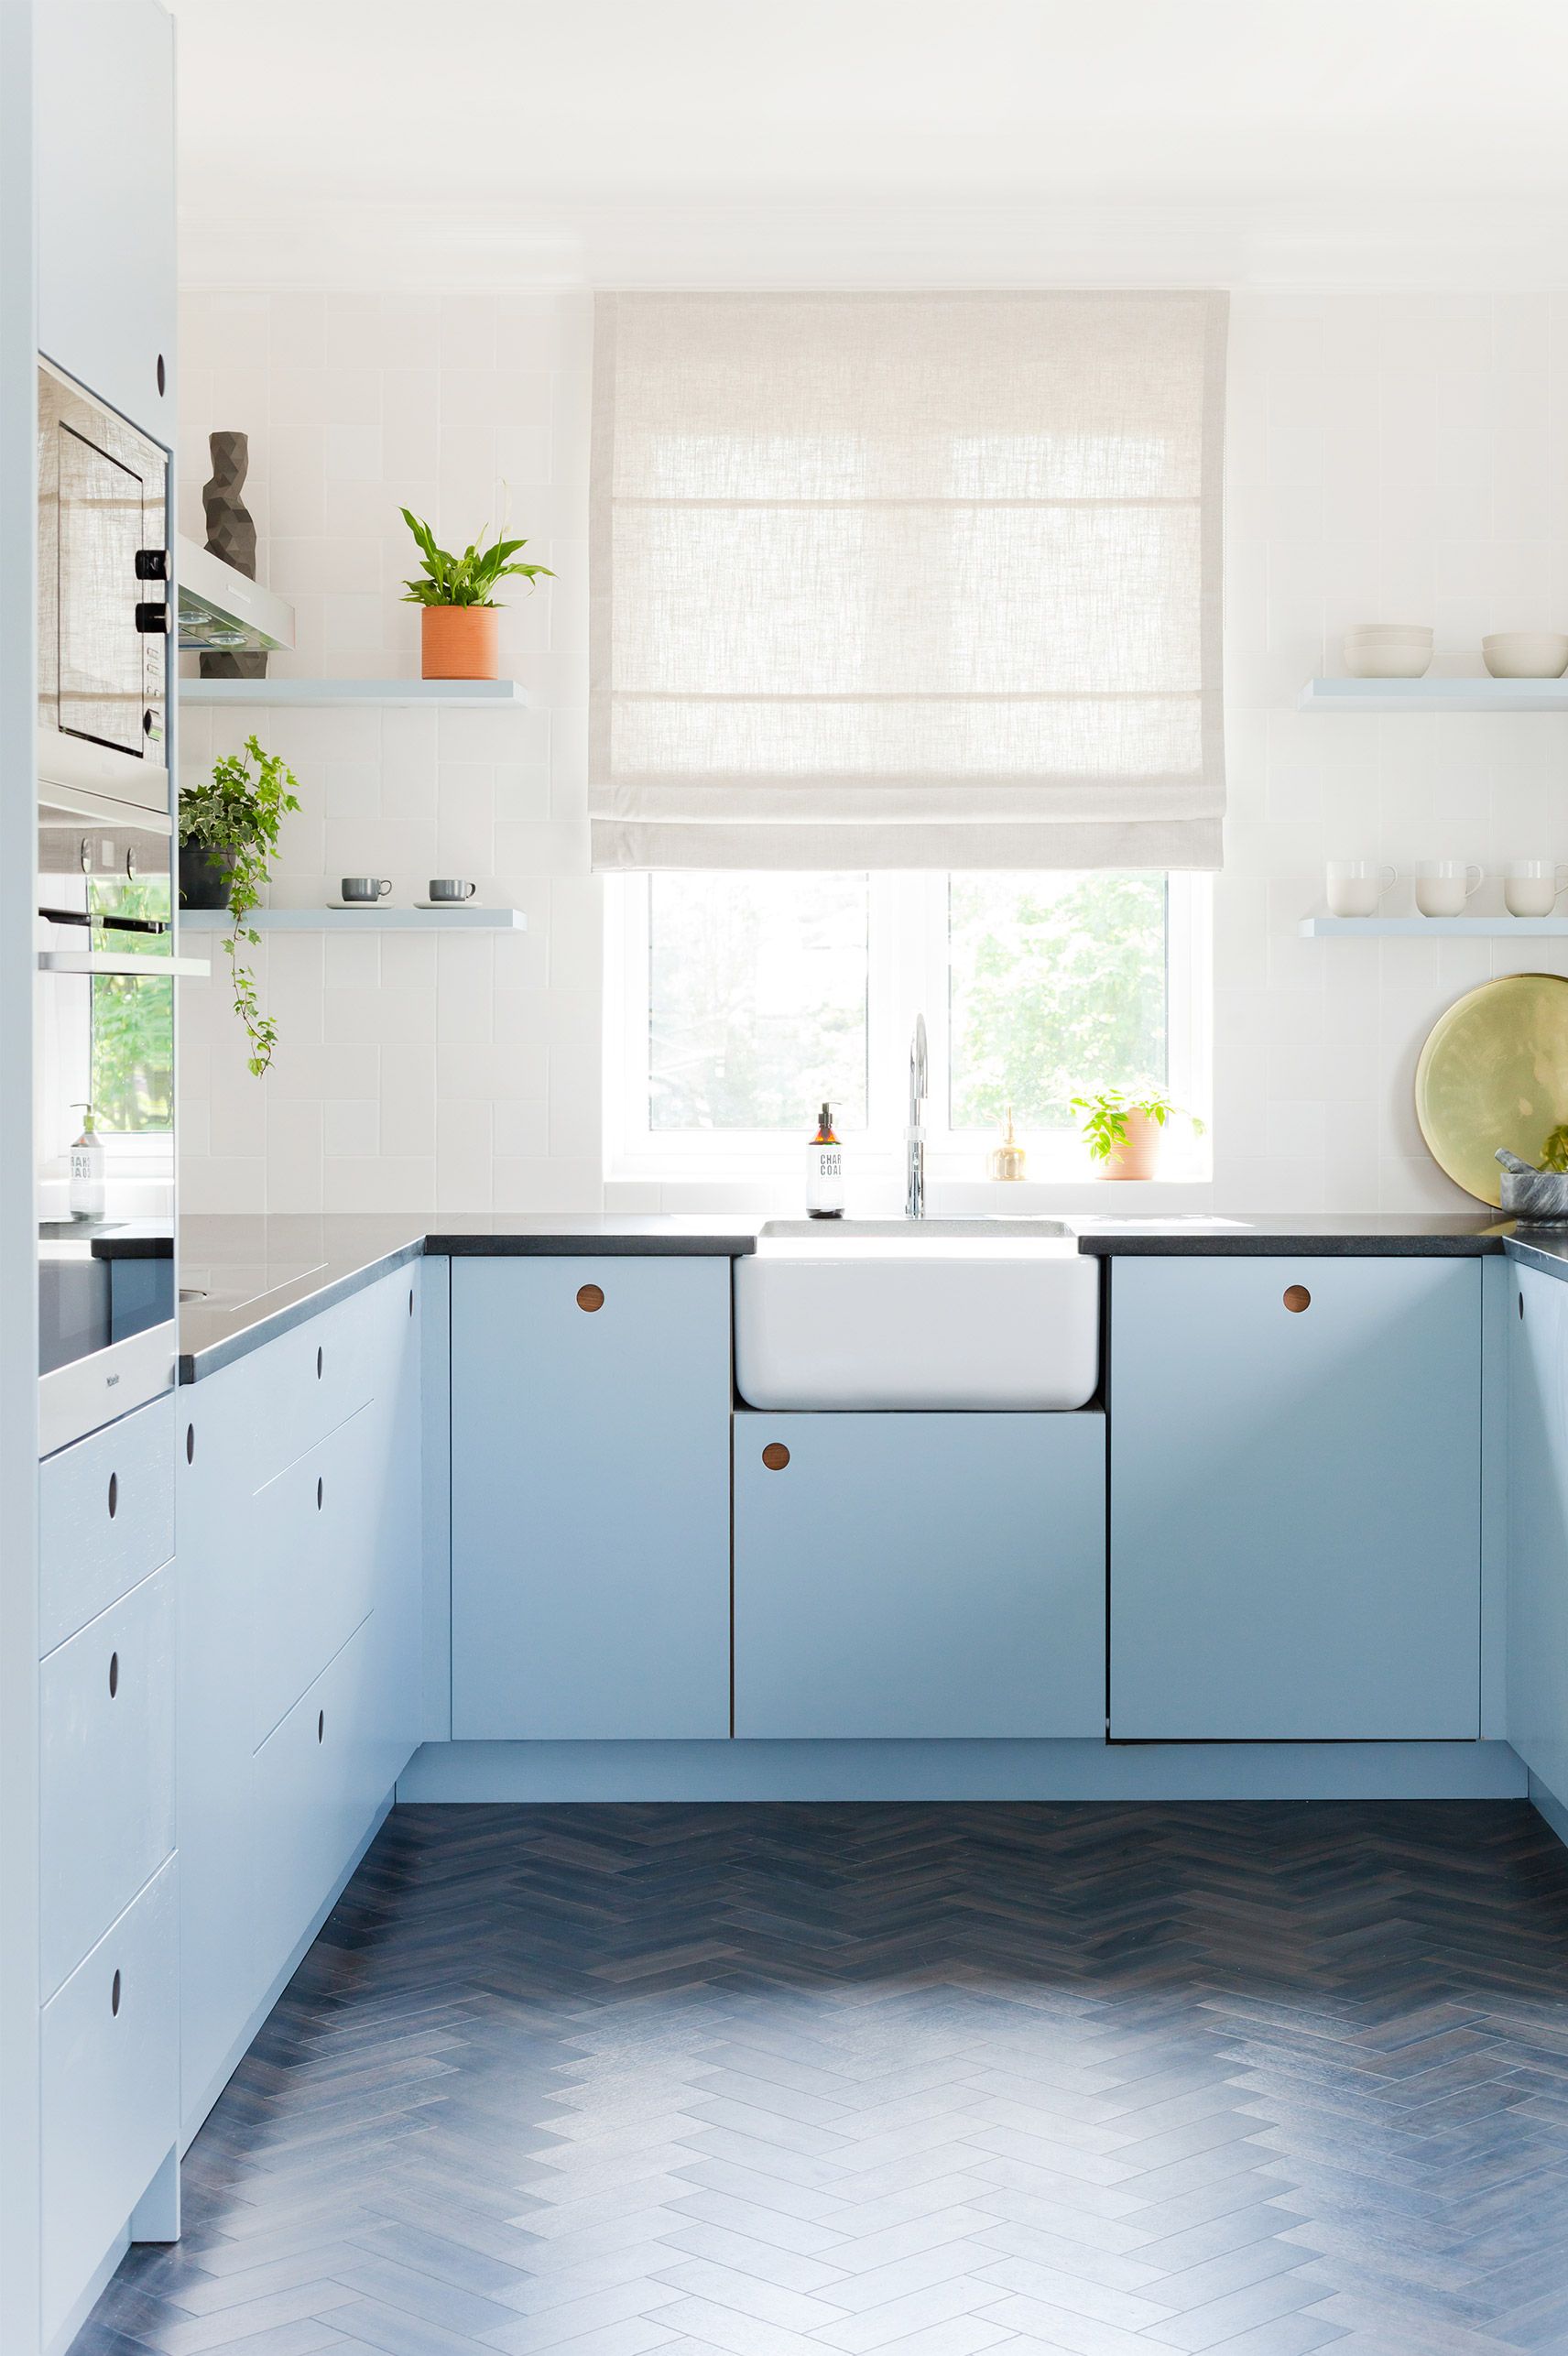 New kitchen colors images 43 Best Kitchen Paint Colors Ideas For Popular